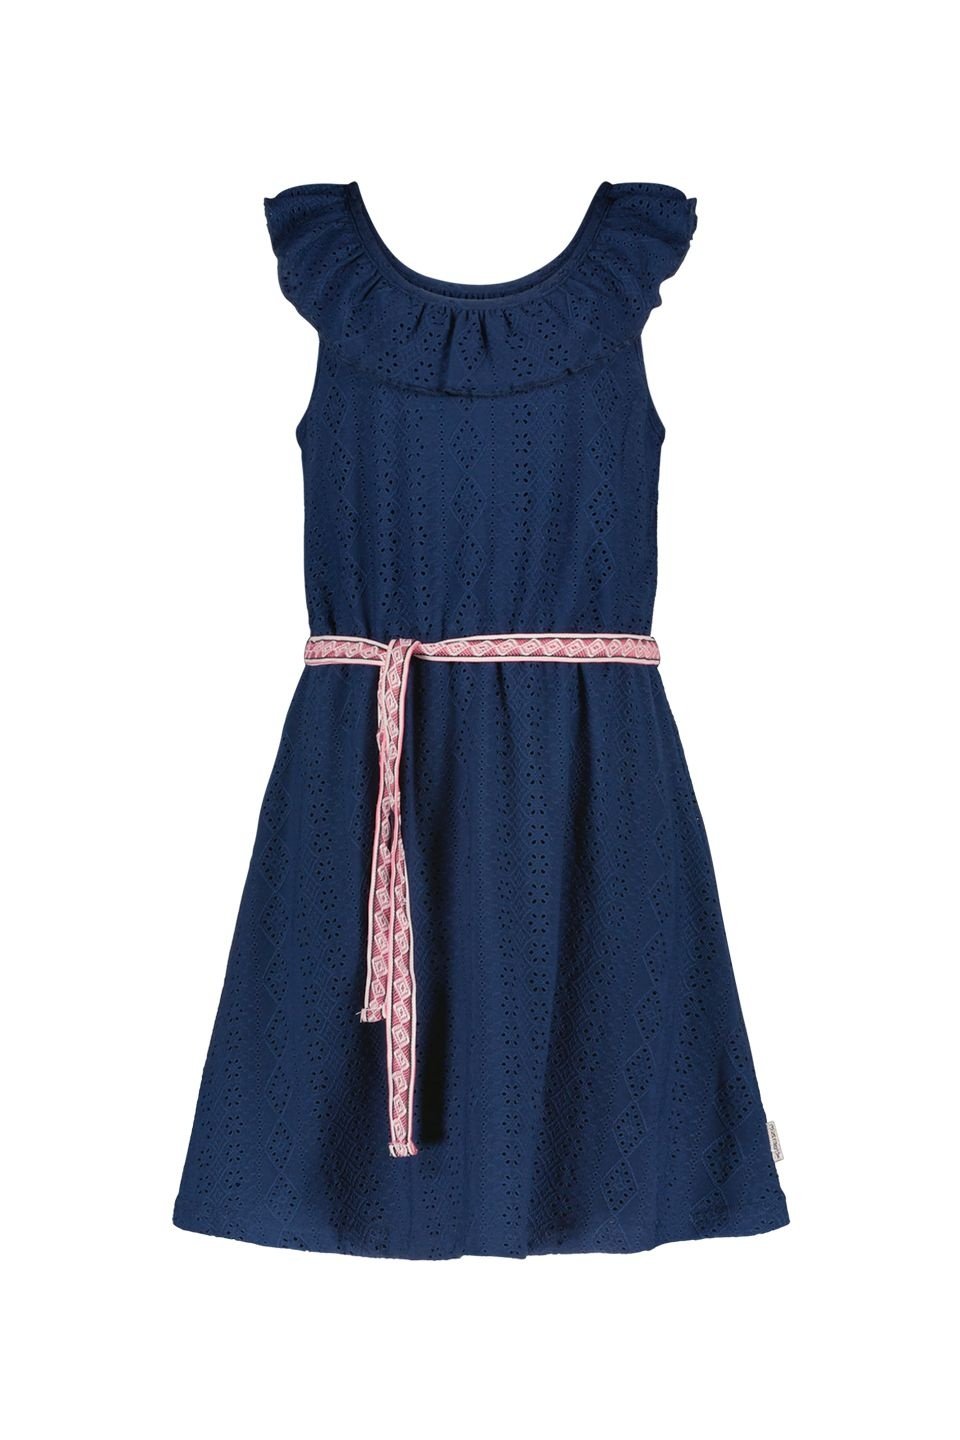 B.Nosy Meisjes jurk - Talia - Lake blauw